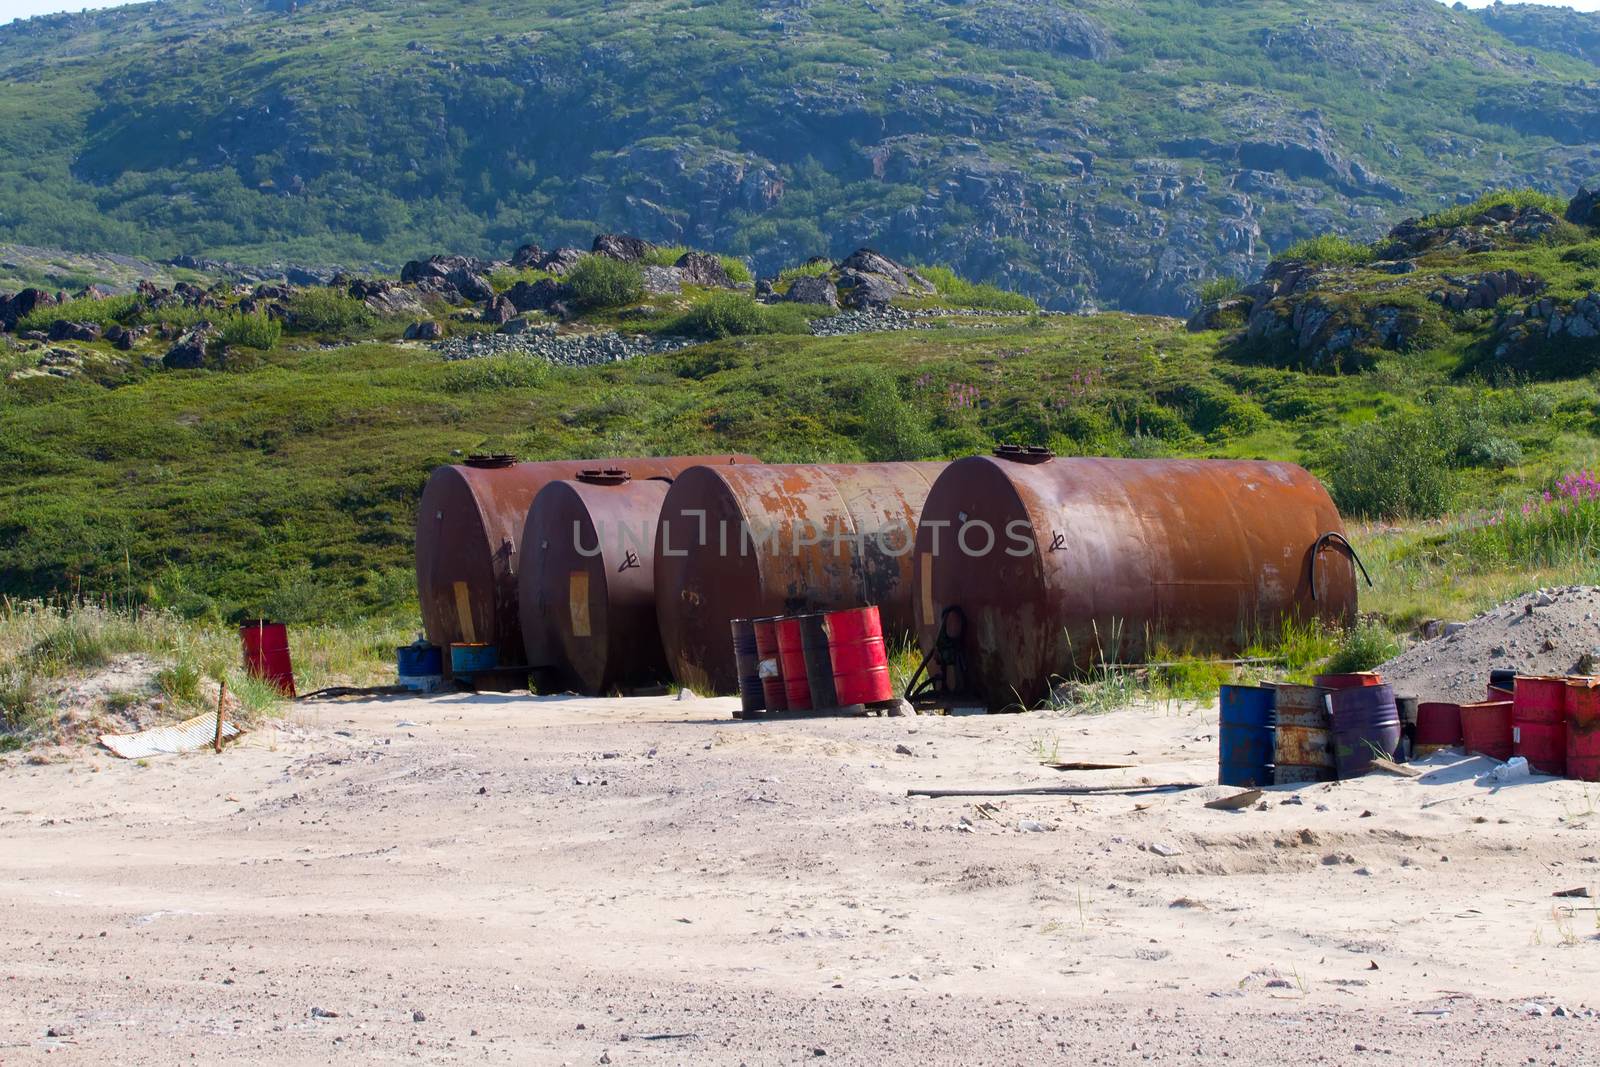 empty barrels in the Arctic environmental pollution